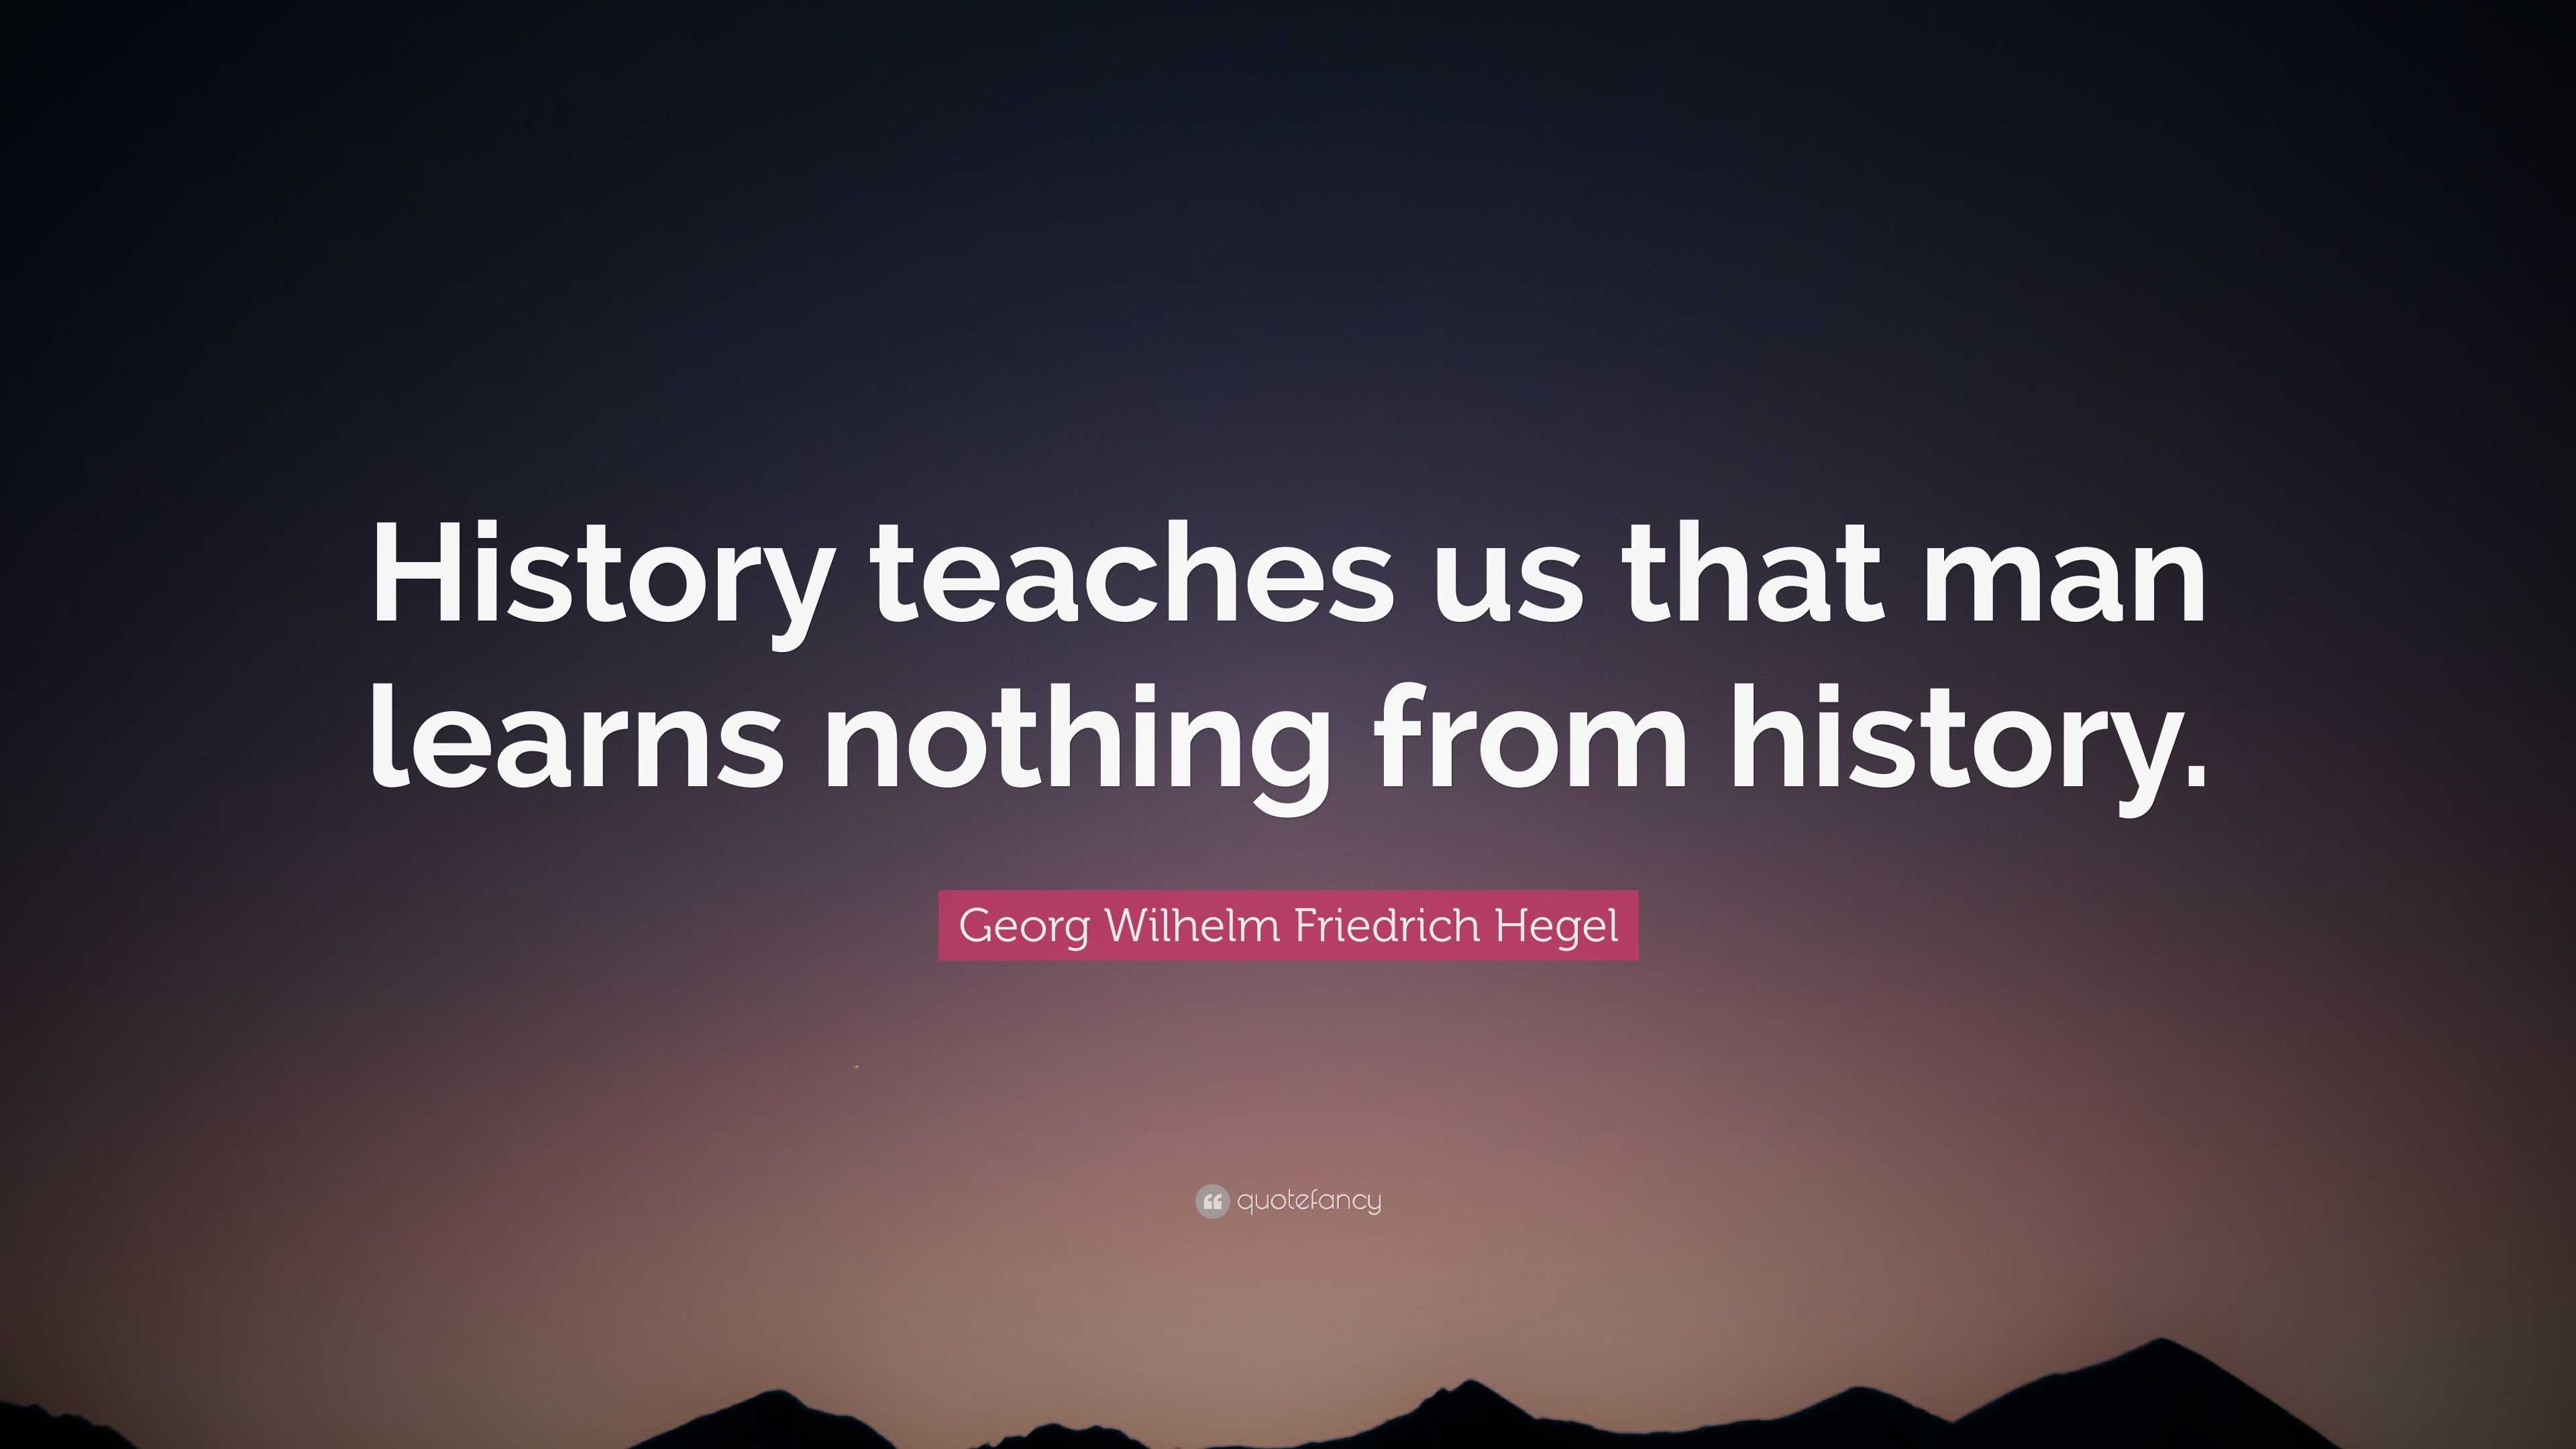 Georg Wilhelm Friedrich Hegel Quote: “History teaches us that man